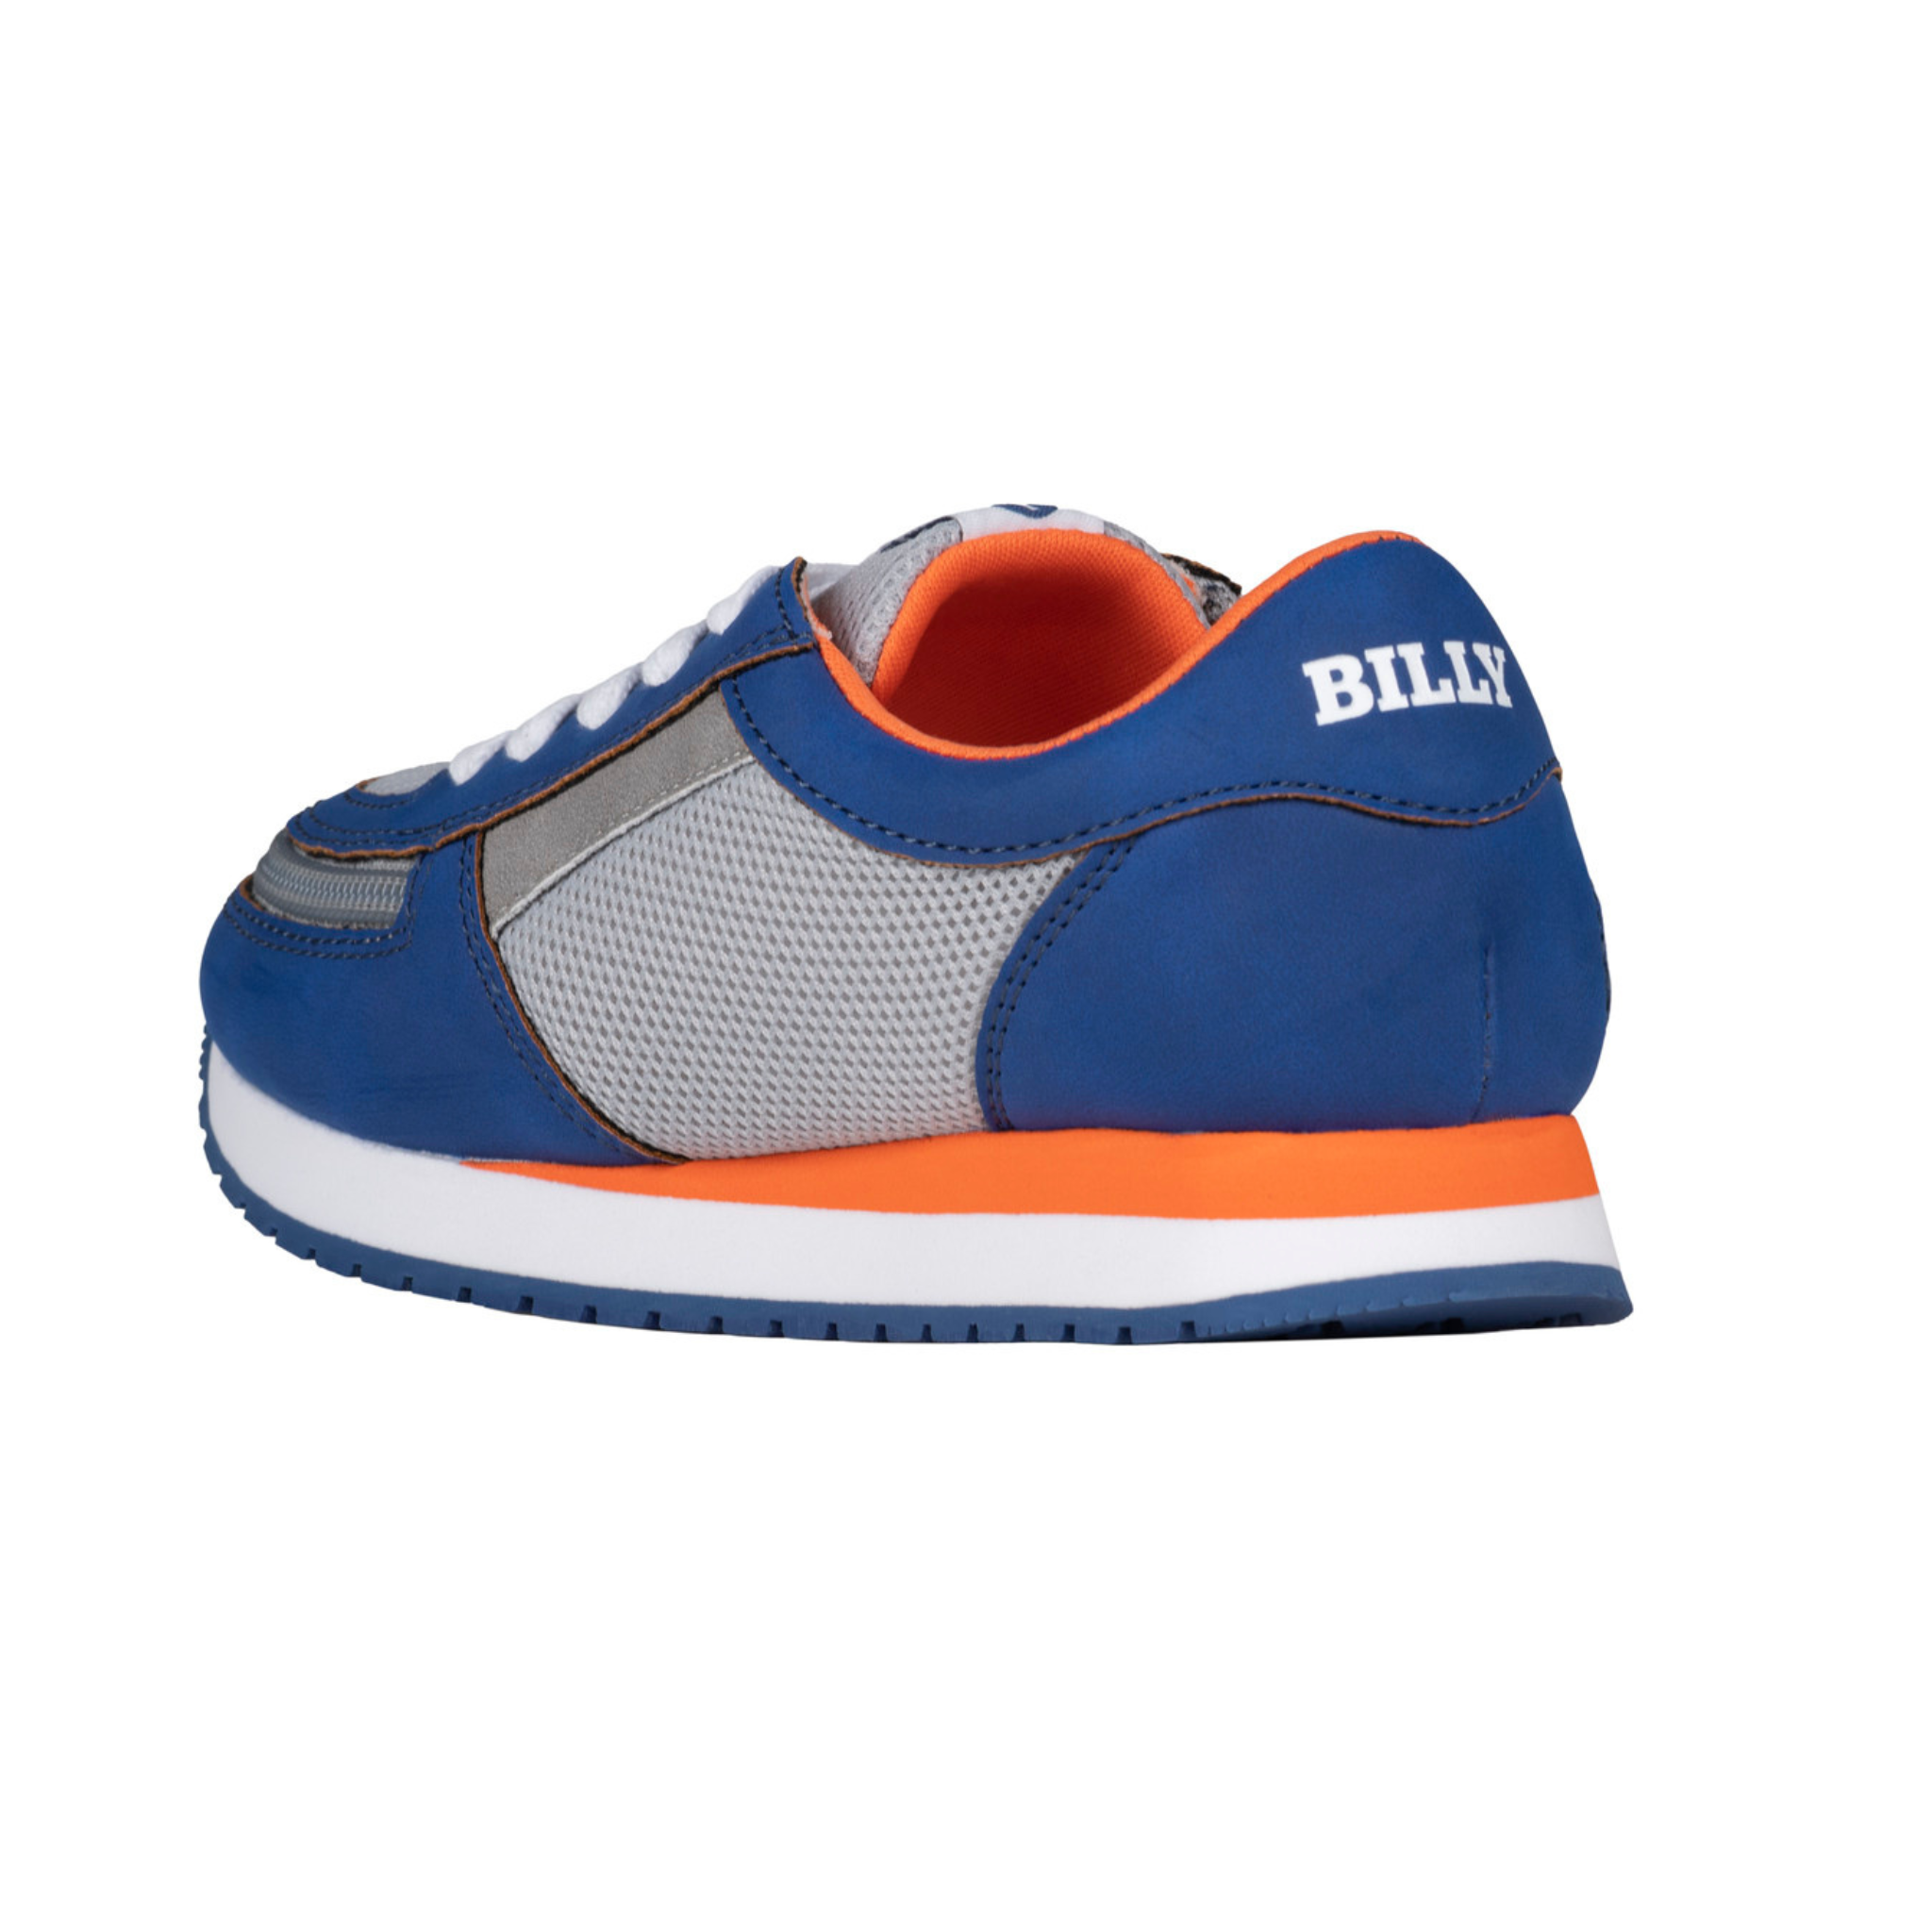 Billy Footwear (Kids) - Trainers Faux Suede Navy / Orange